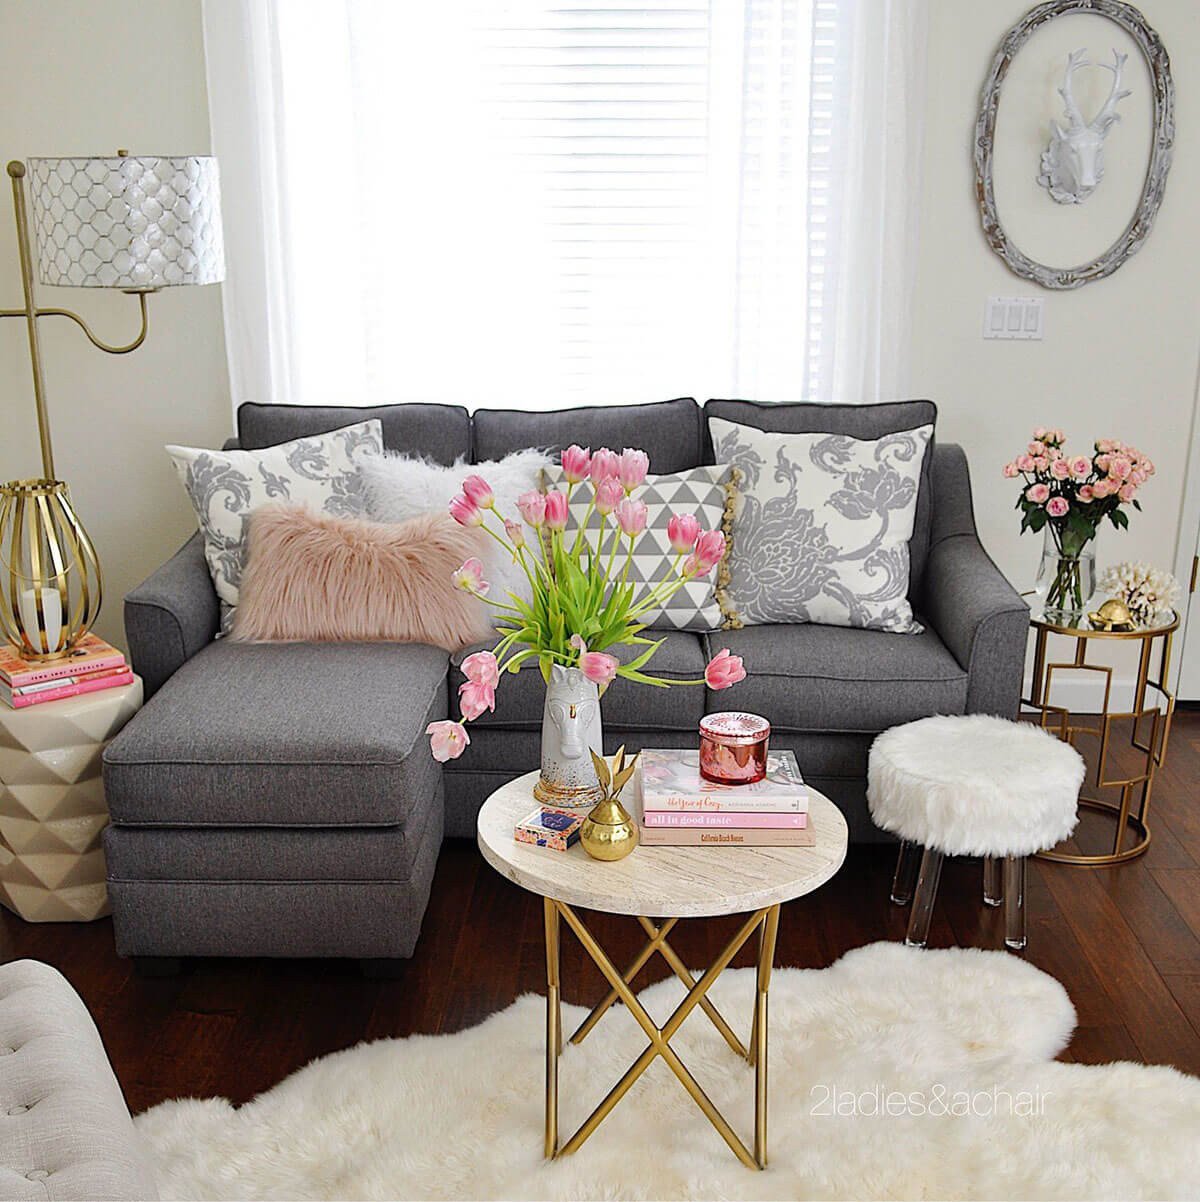 Small Living Room Decorating Ideas Luxury 25 Best Small Living Room Decor and Design Ideas for 2019